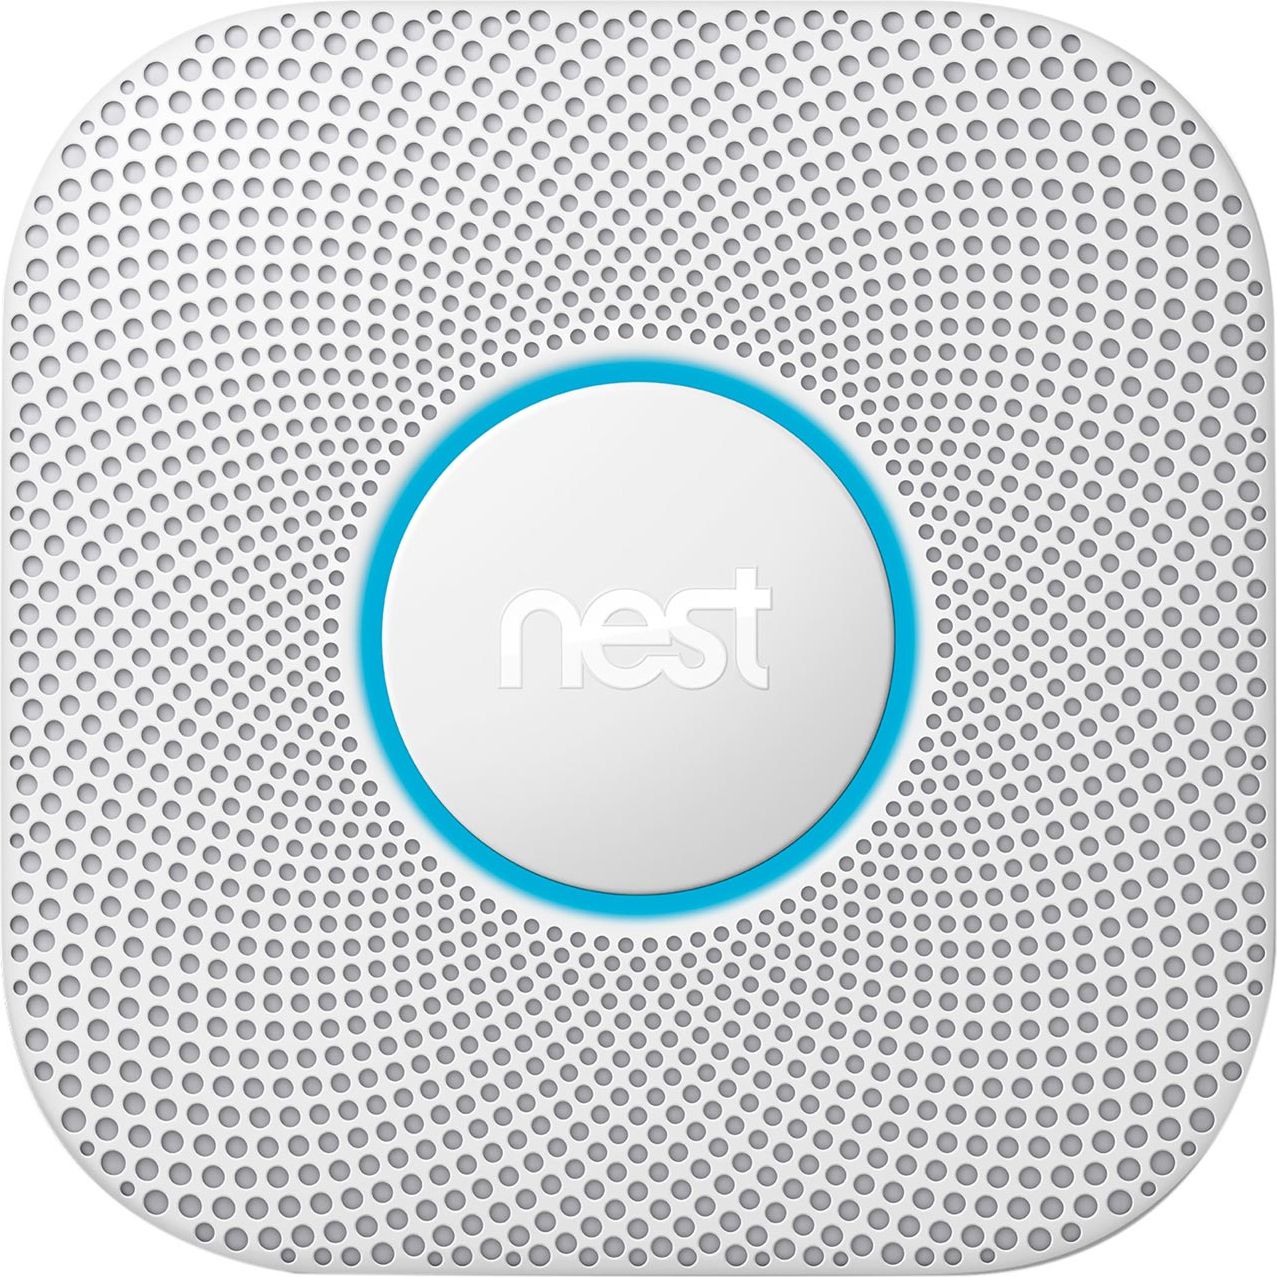 Google Nest Protect Smart Smoke And CO2 Alarm - Mains Powered, White